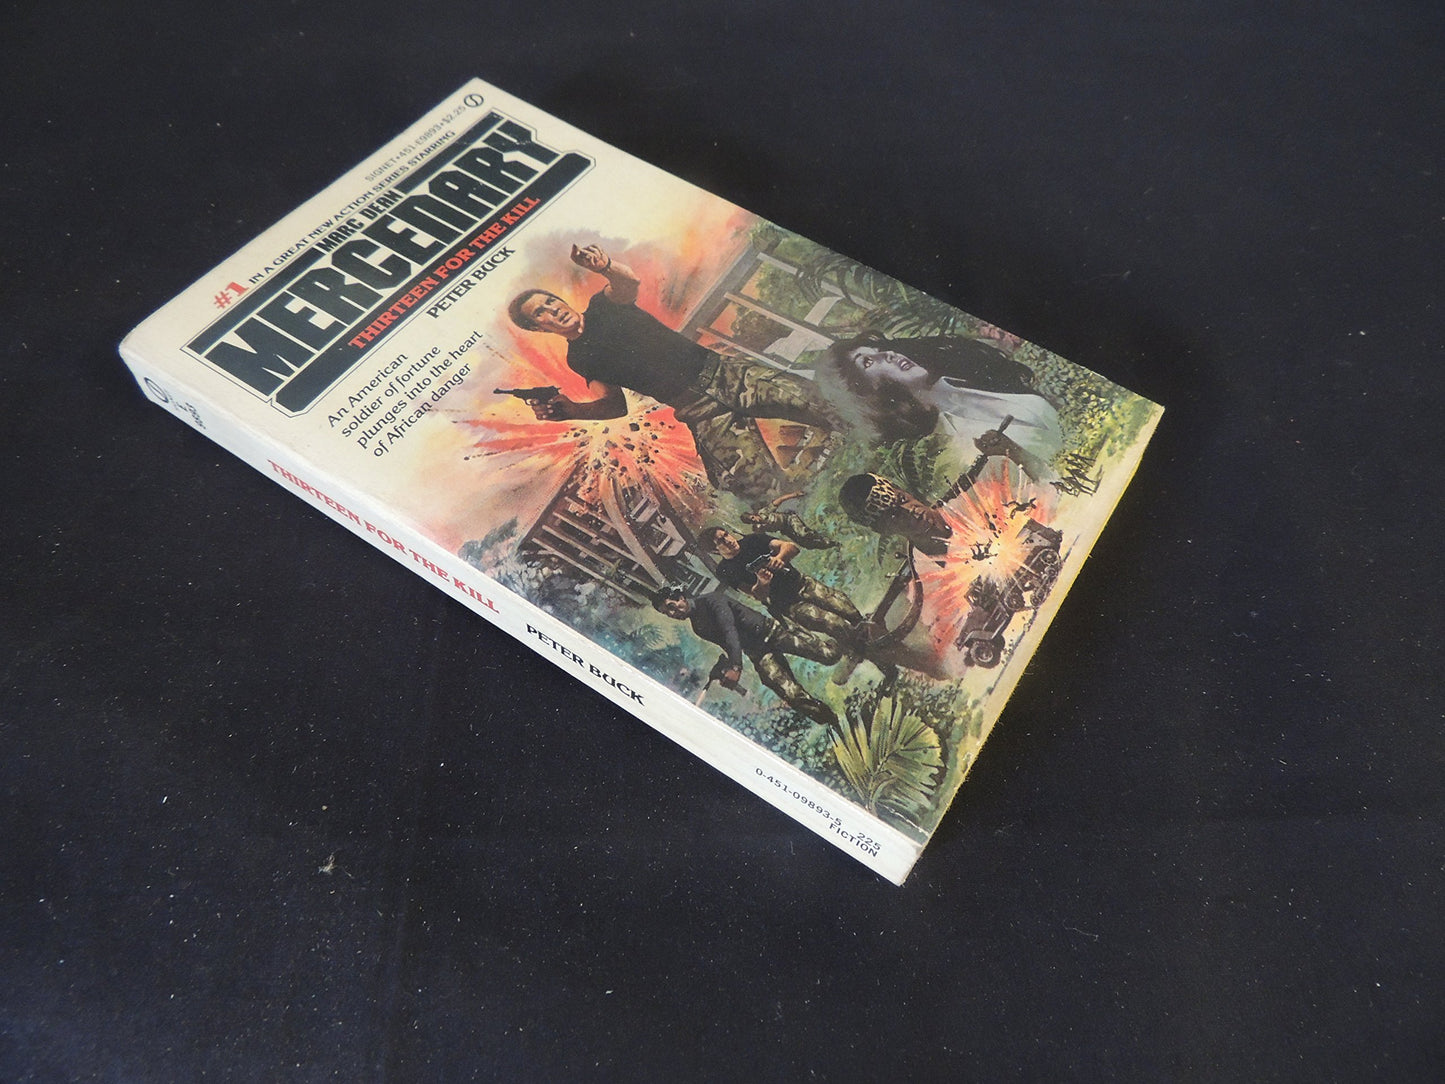 Vintage 1981 Marc Dean Mercenary #1: Thirteen For the Kill Peter Buck First Printing